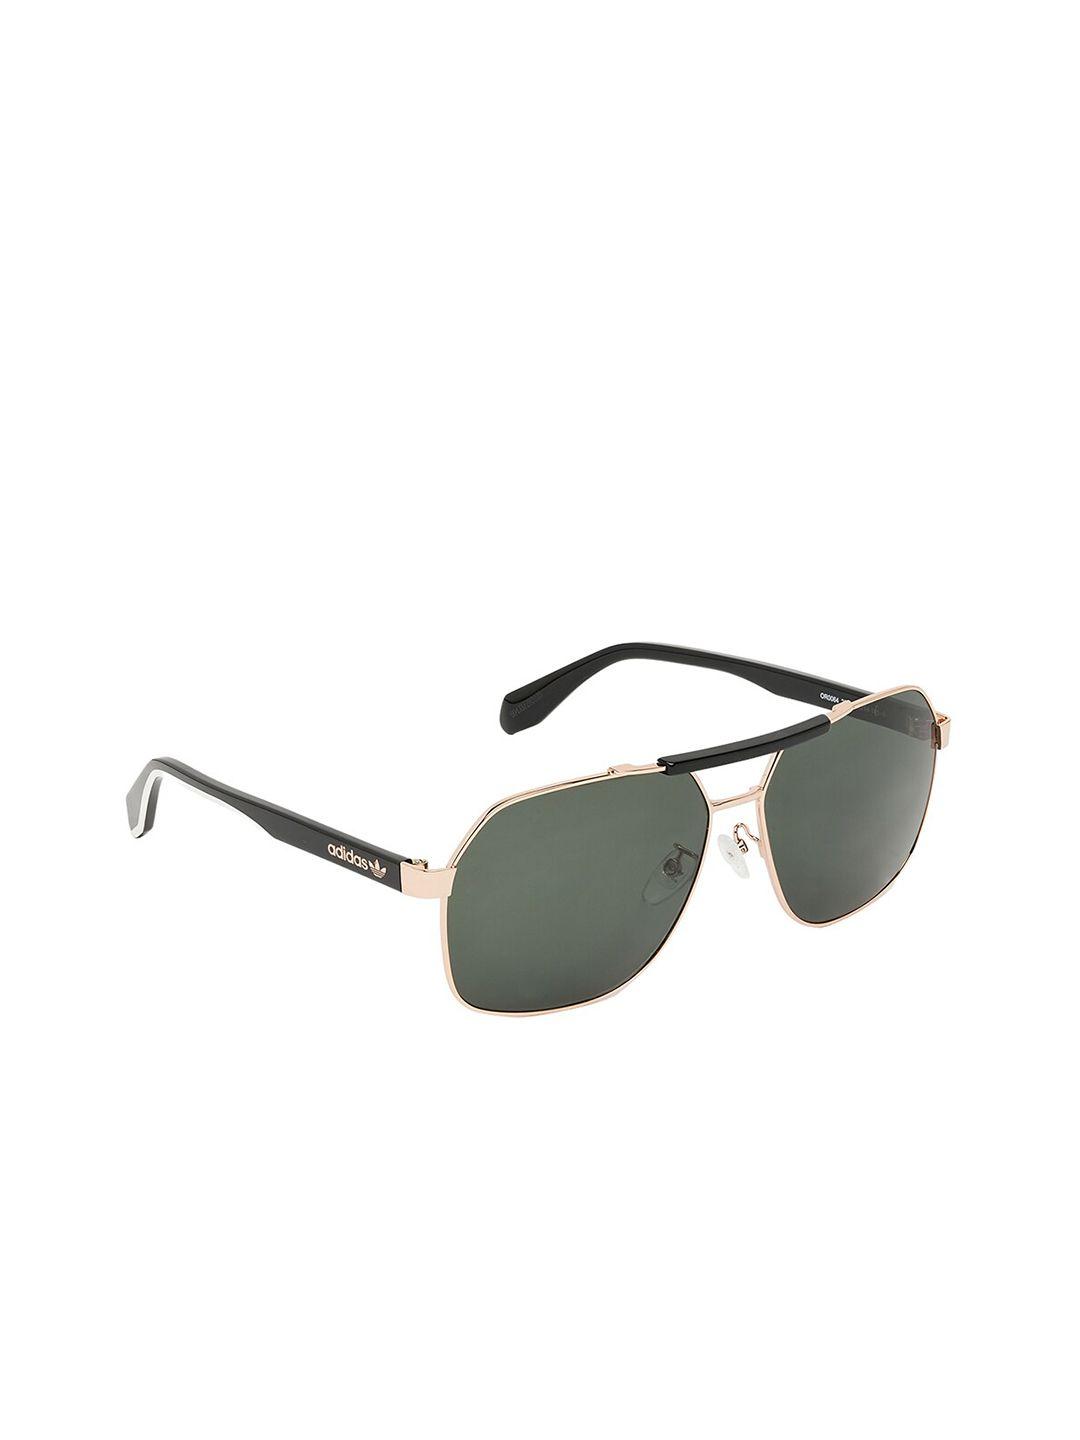 adidas-men-uv-protected-square-sunglasses-or0064-28n